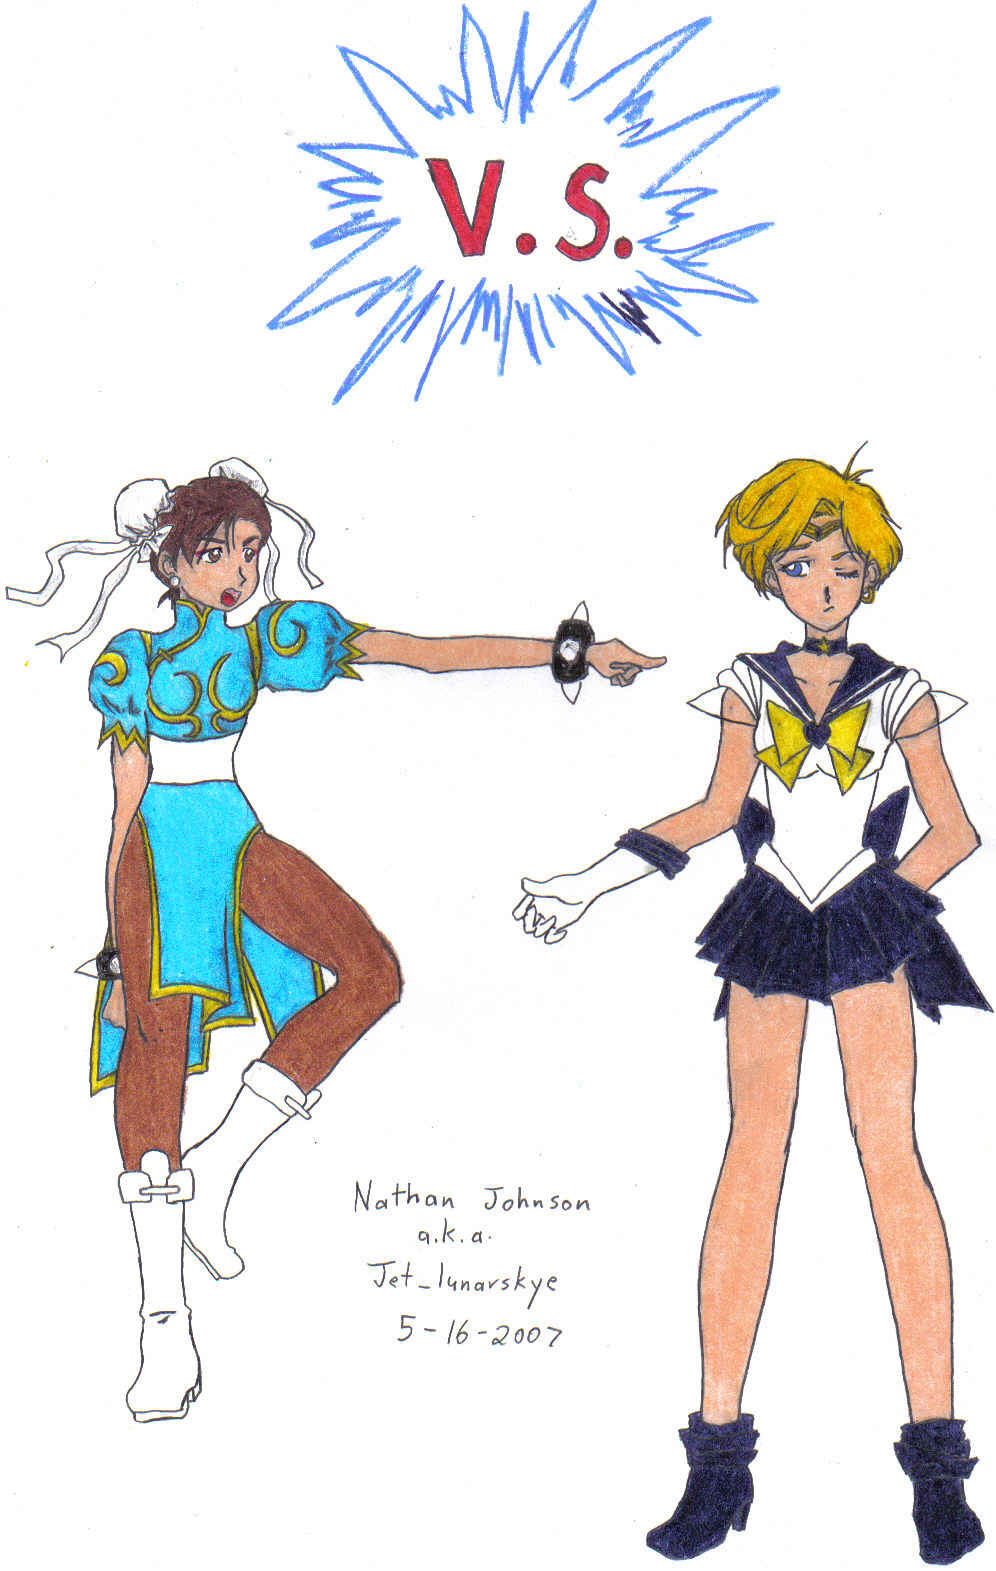 Chun-li V.S. Sailor Uranus by Jet_lunarskye